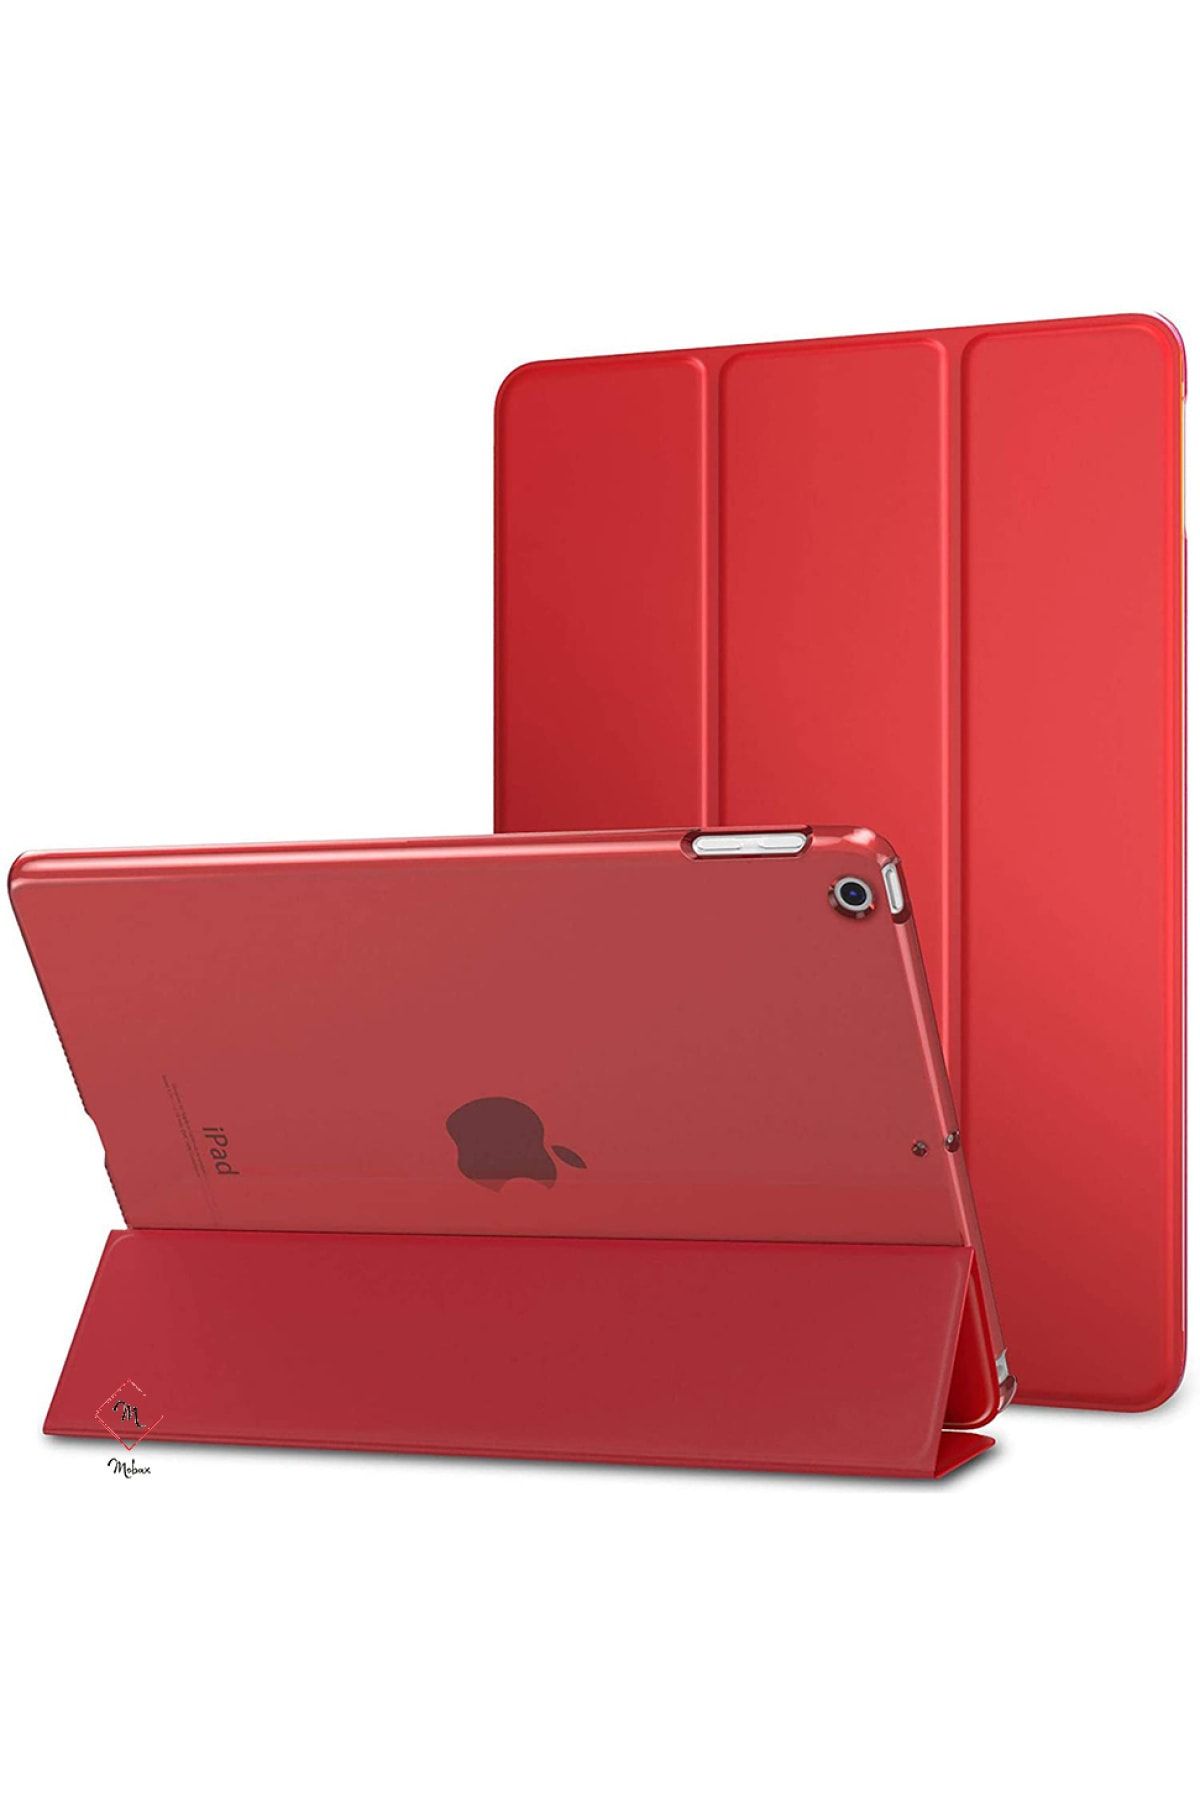 UnDePlus Apple Ipad Air 3 10.5 2019 Kılıf Pu Deri Smart Case A2152 A2123 A2153 A2154 Kırmızı